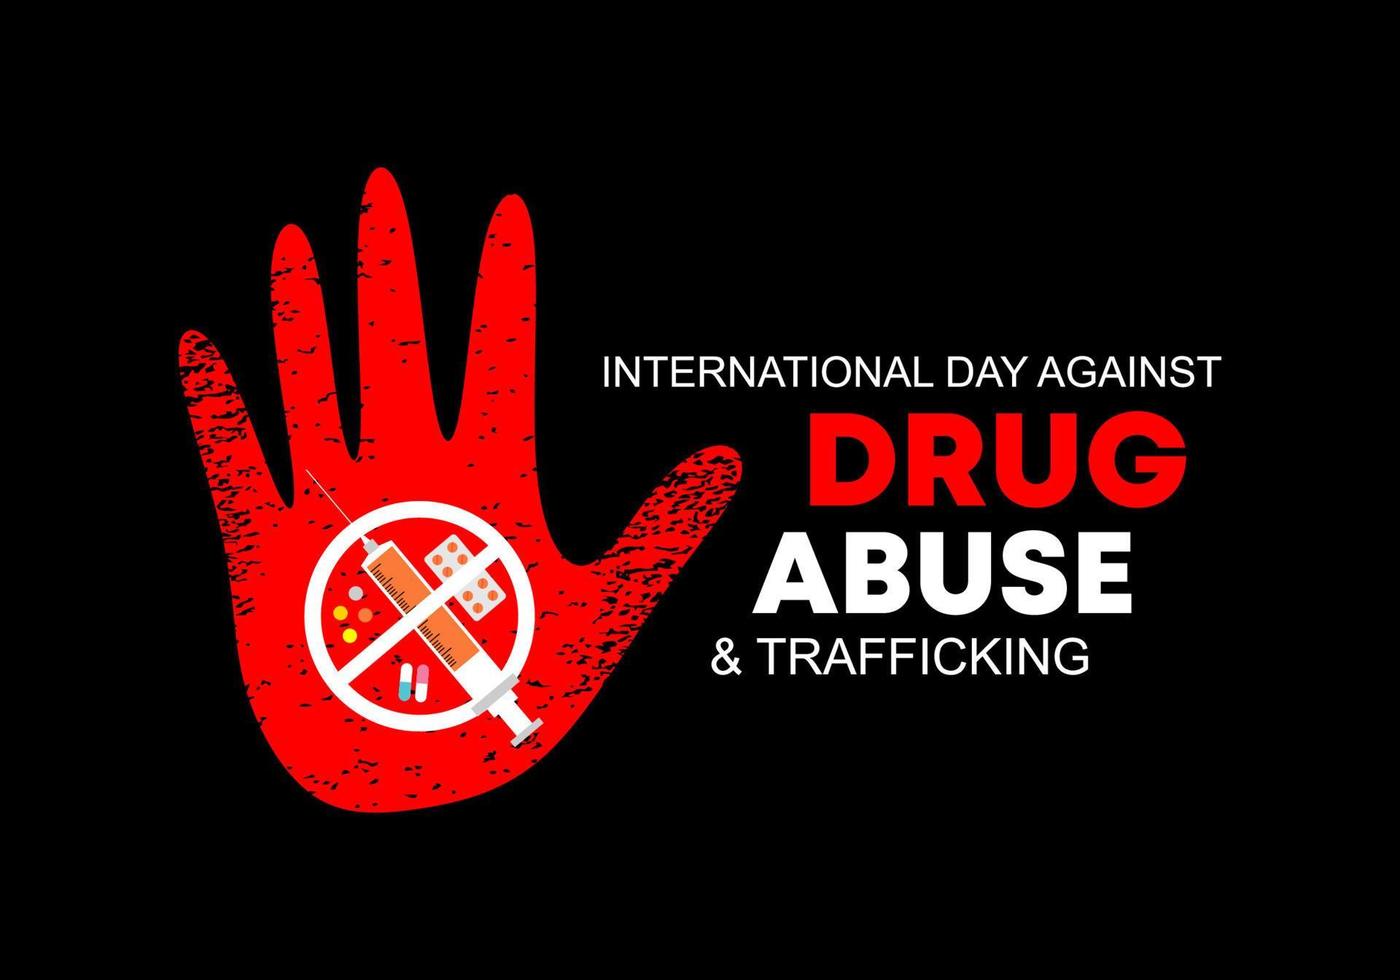 Background poster or banner for International Day against Drug Abuse vector